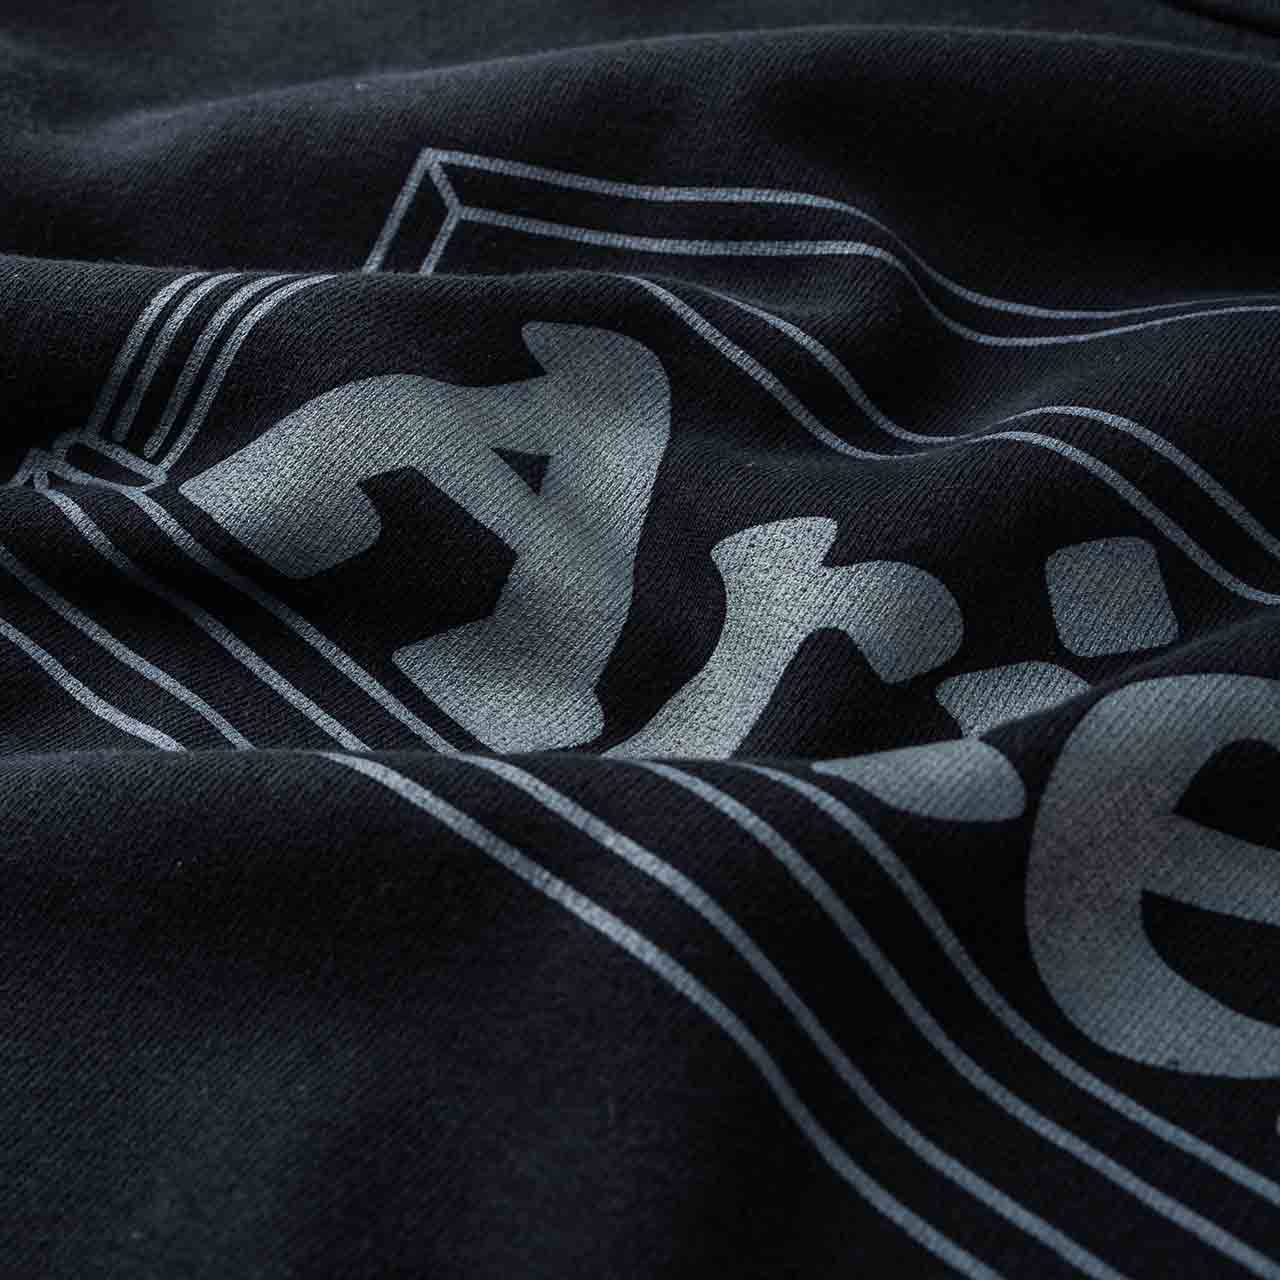 aries 2 chains hoodie (black / grey) - fqar20008-blk - a.plus - Image - 4